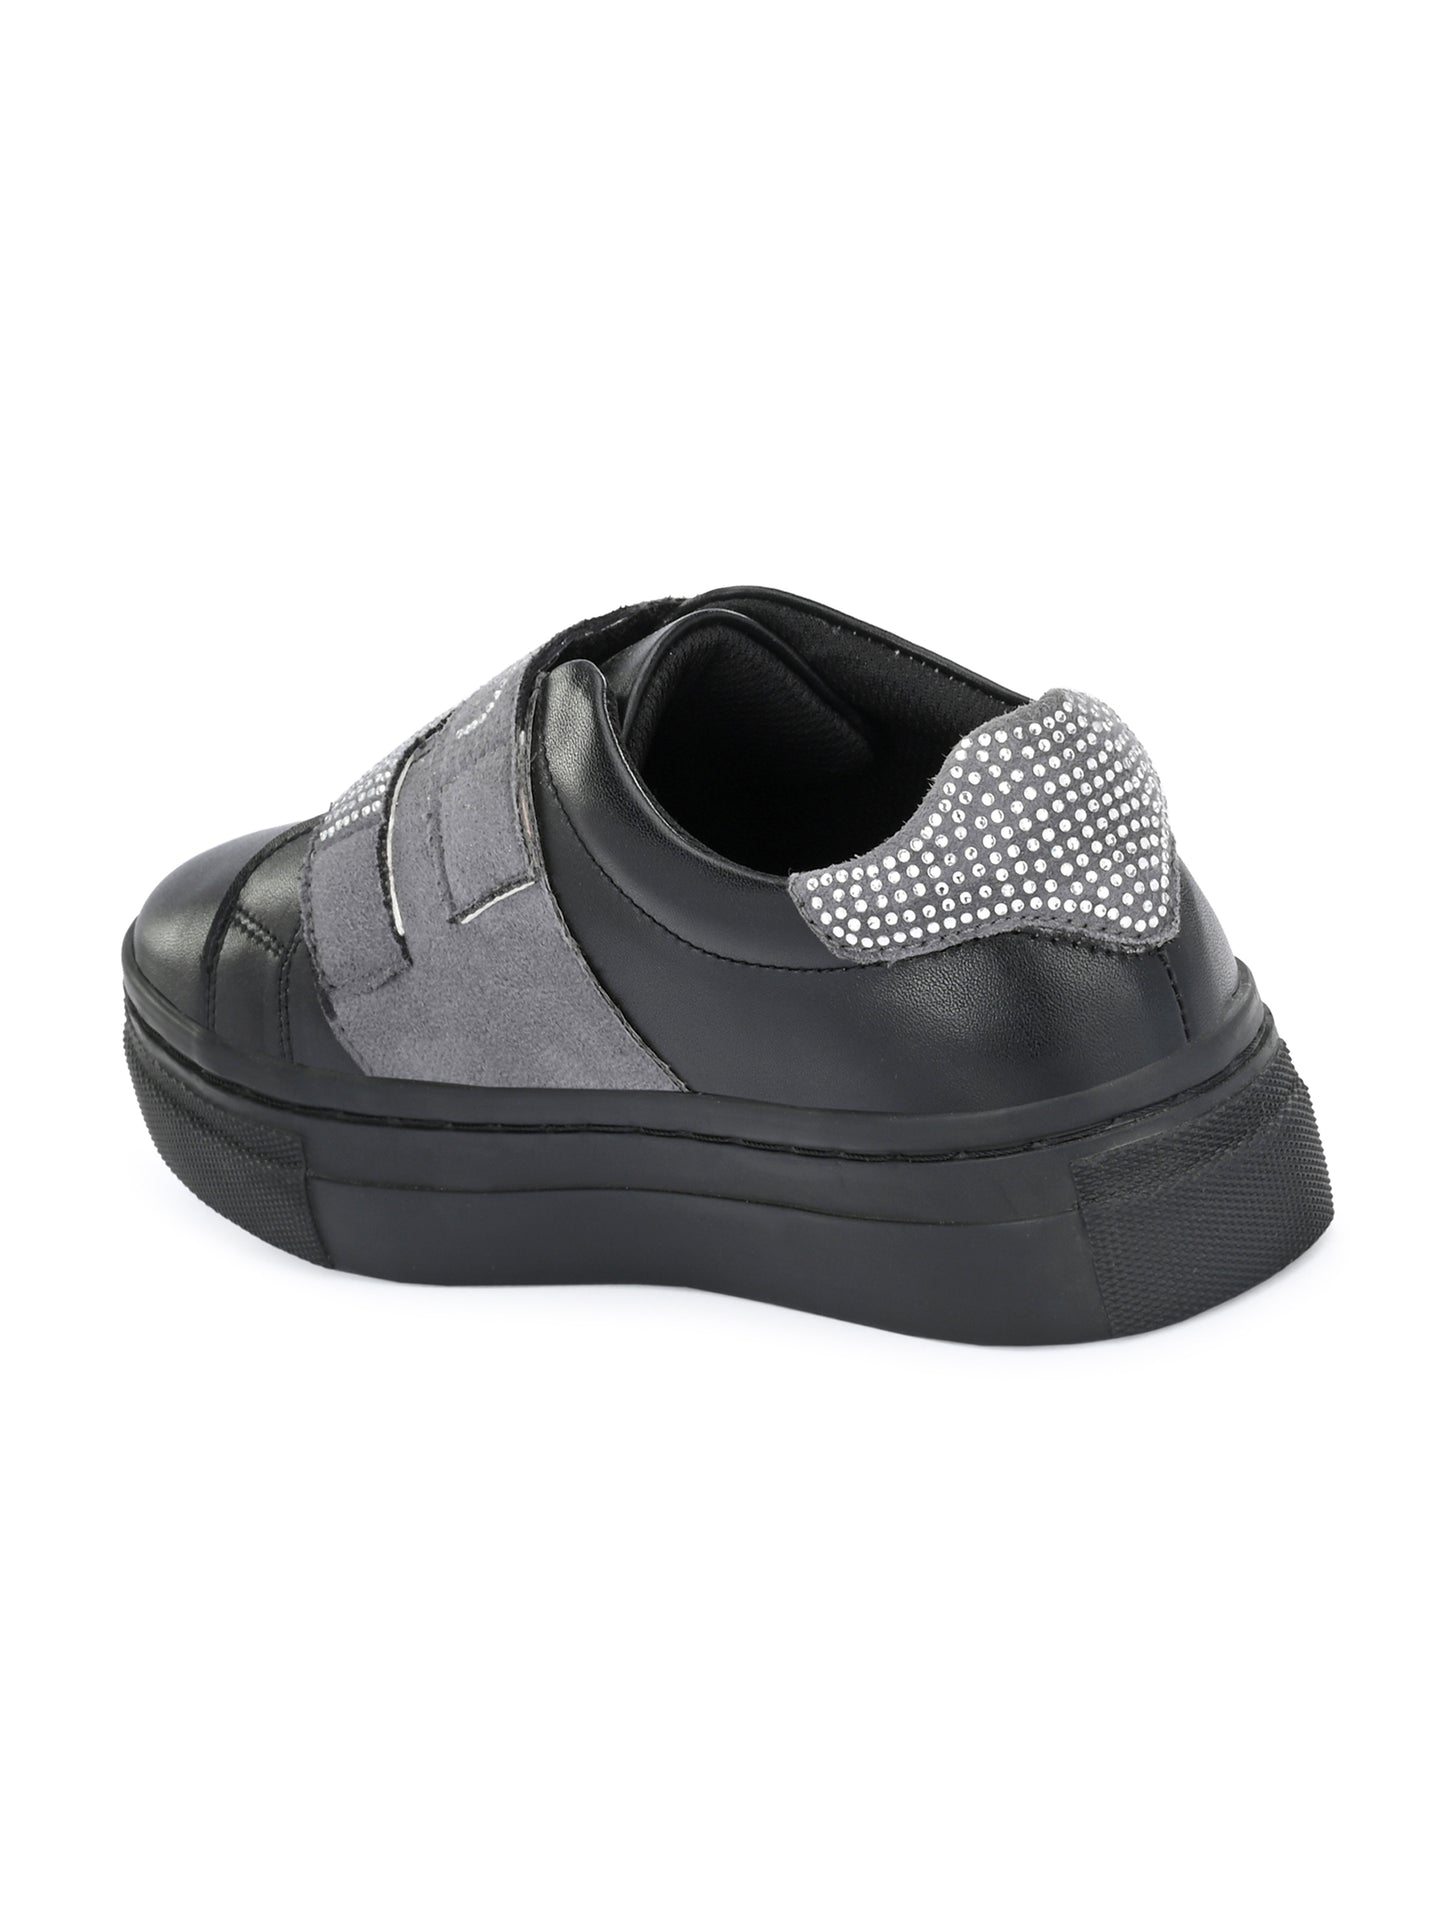 Niko Black Grey Shoes for Kids